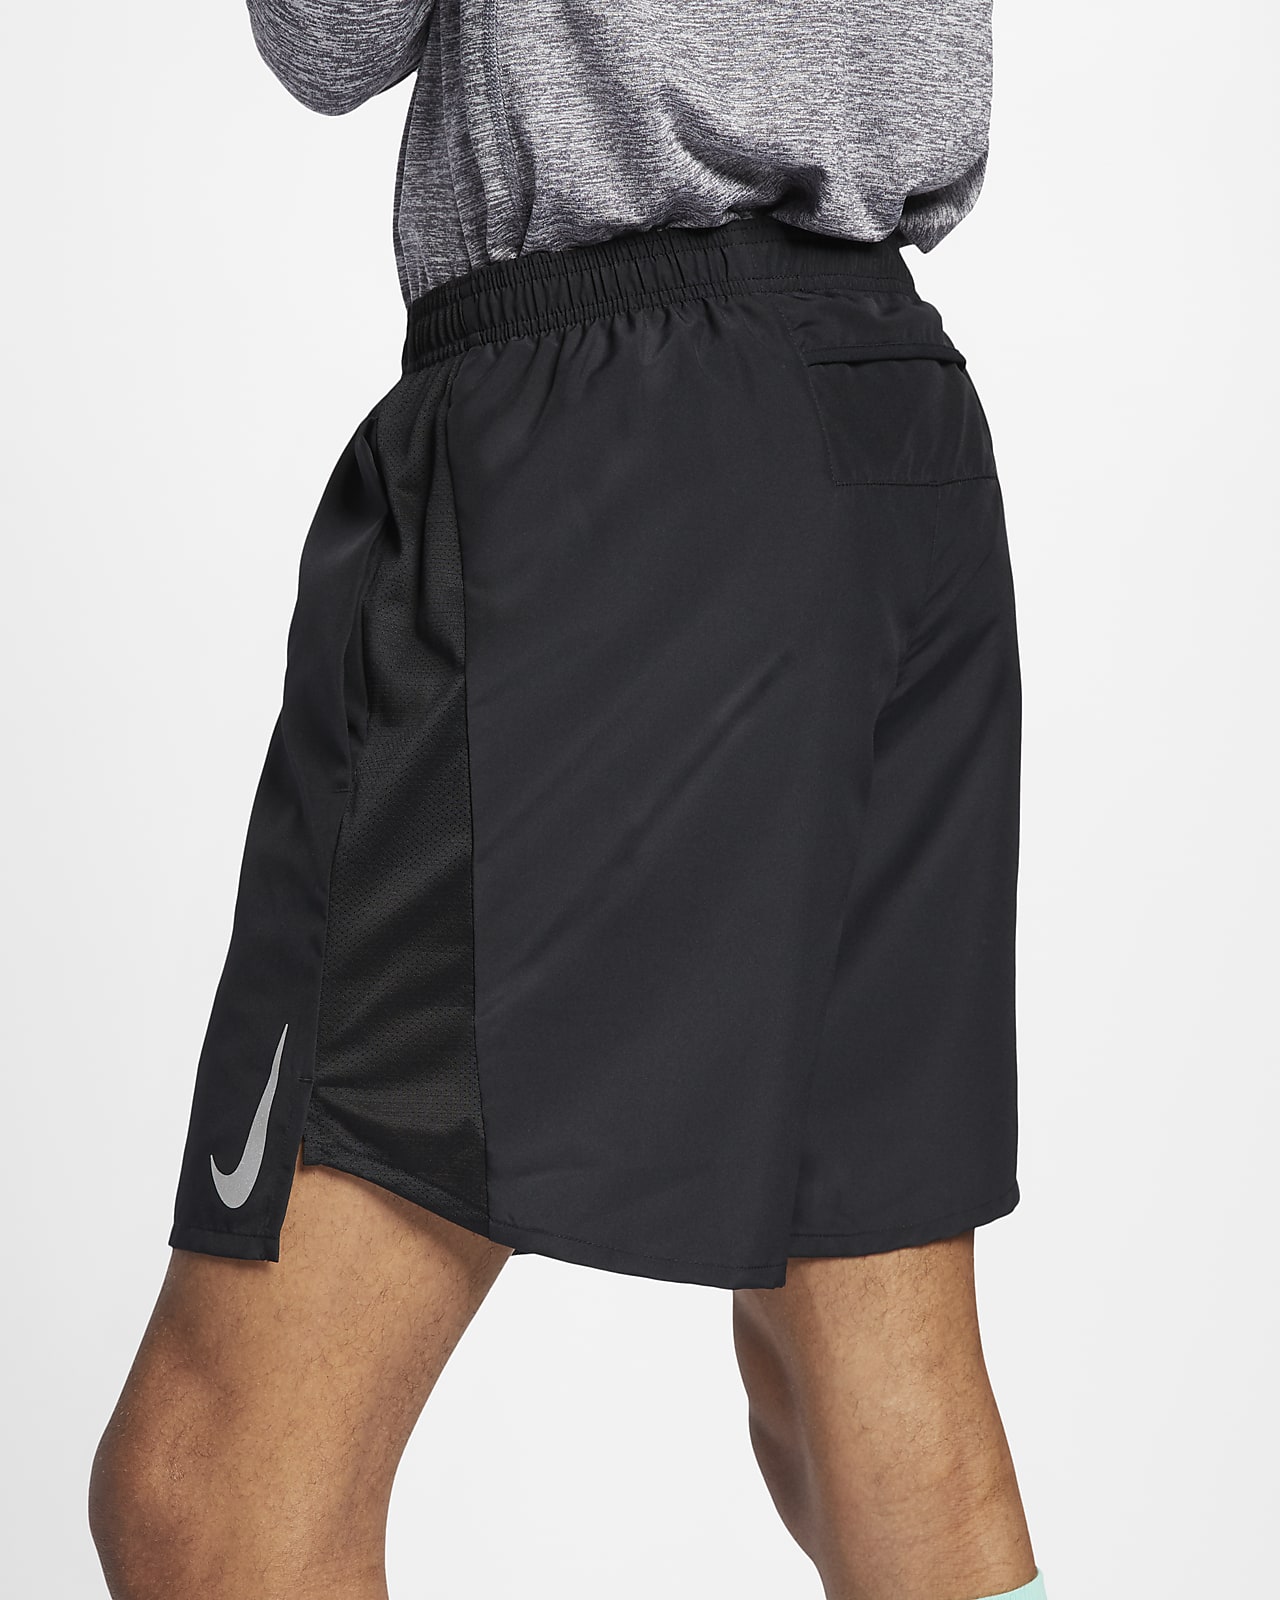 nike running challenger shorts in black